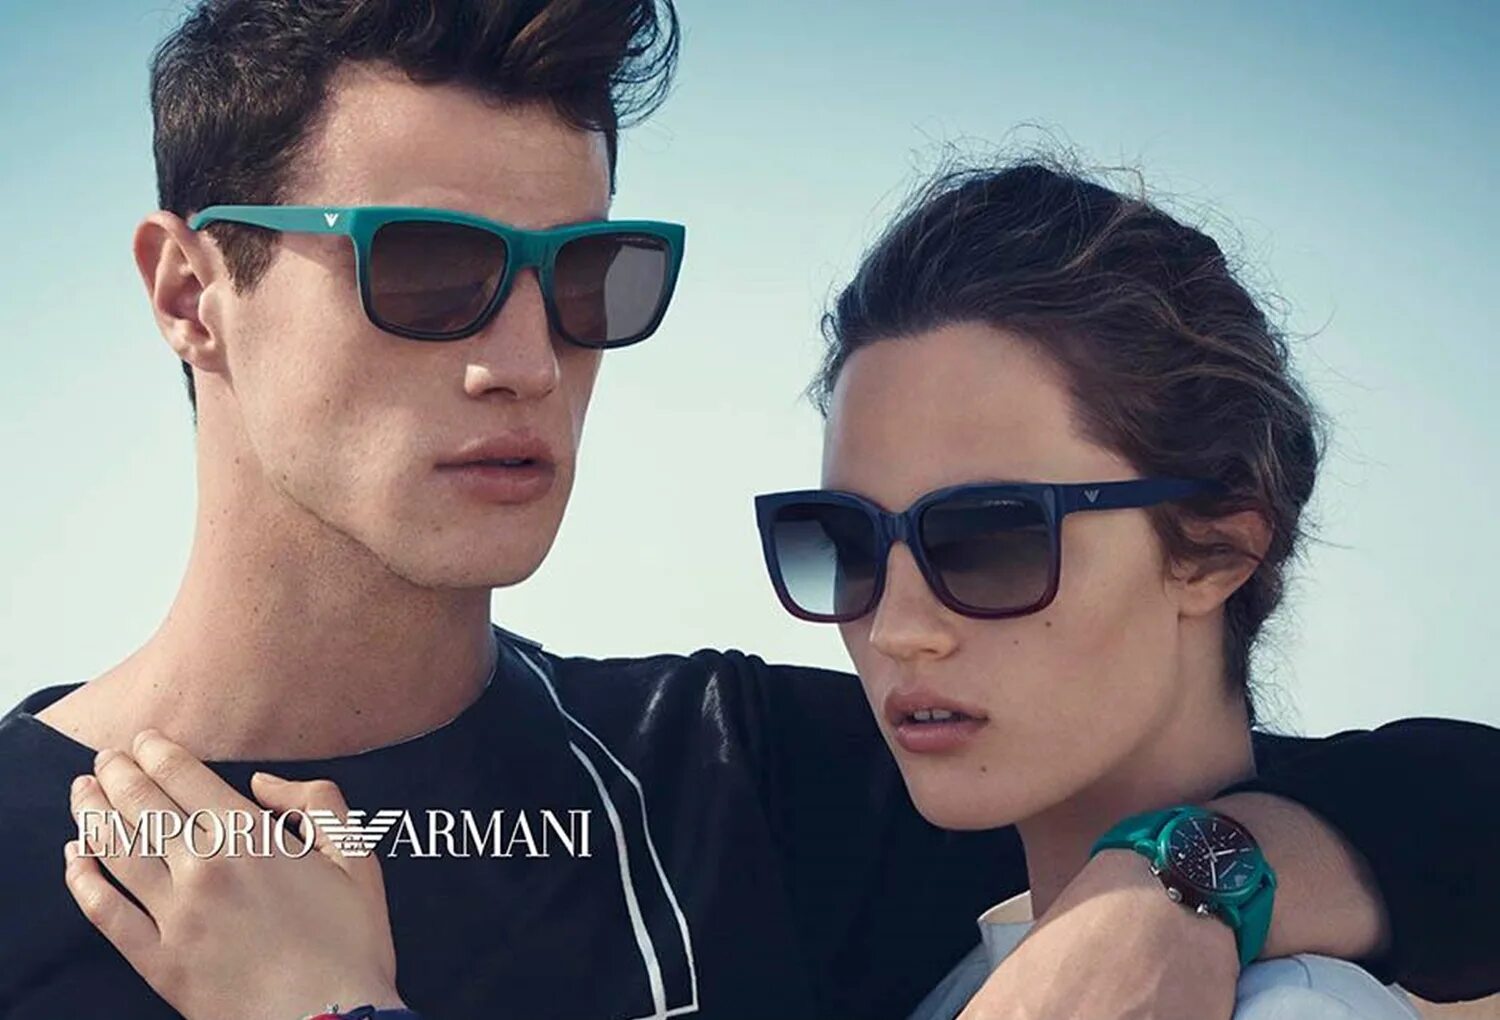 Emporio Armani Eyewear. Emporio Armani Glasses. Emporio Armani 300271 очки. Emporio Armani Eyewear 2018. I my sunglasses